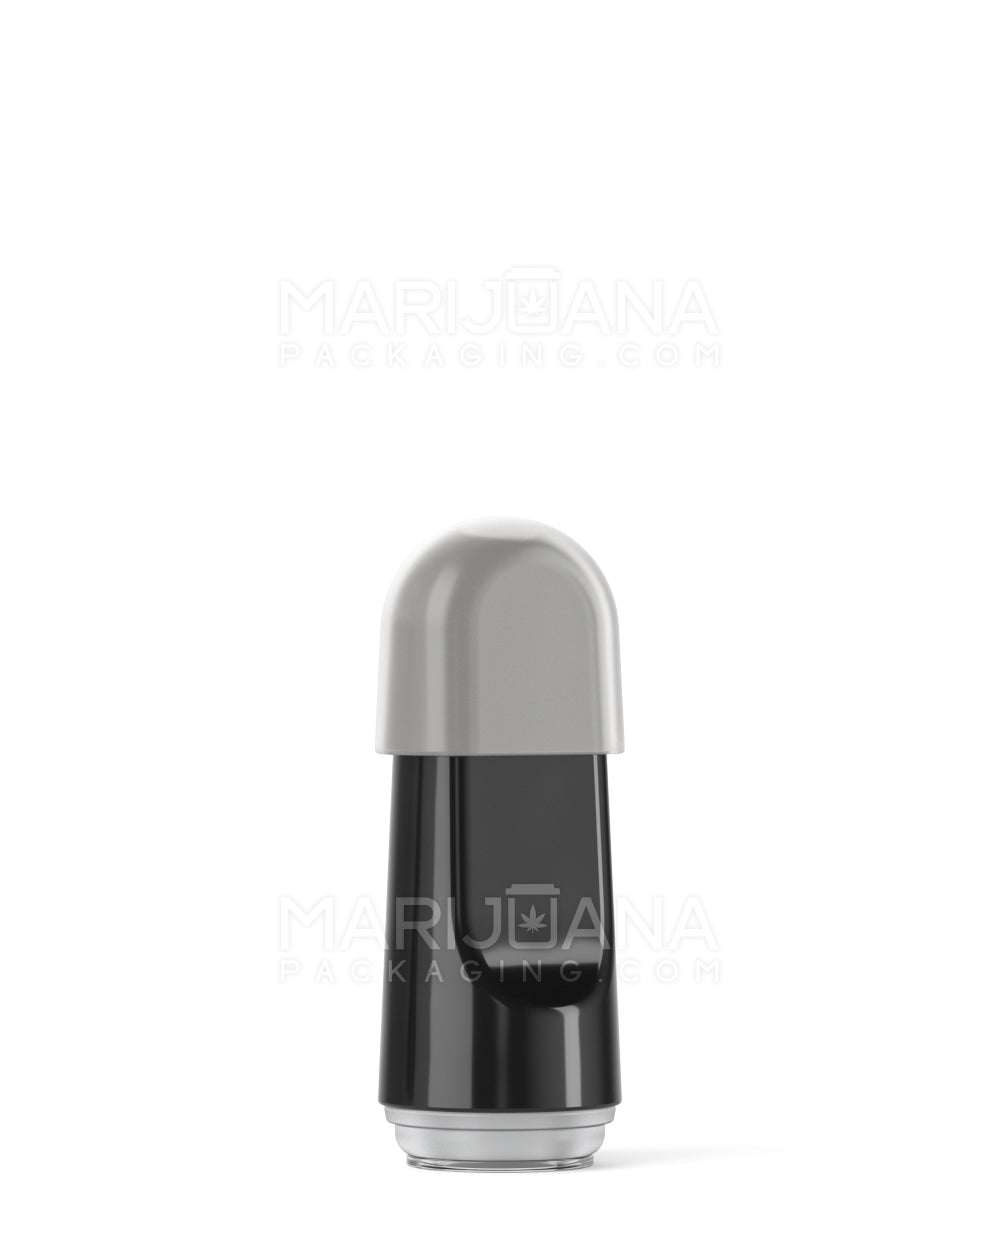 RAE | Flat Vape Mouthpiece for Hand Press Ceramic Cartridges | Black Ceramic - Hand Press - 3600 Count - 7